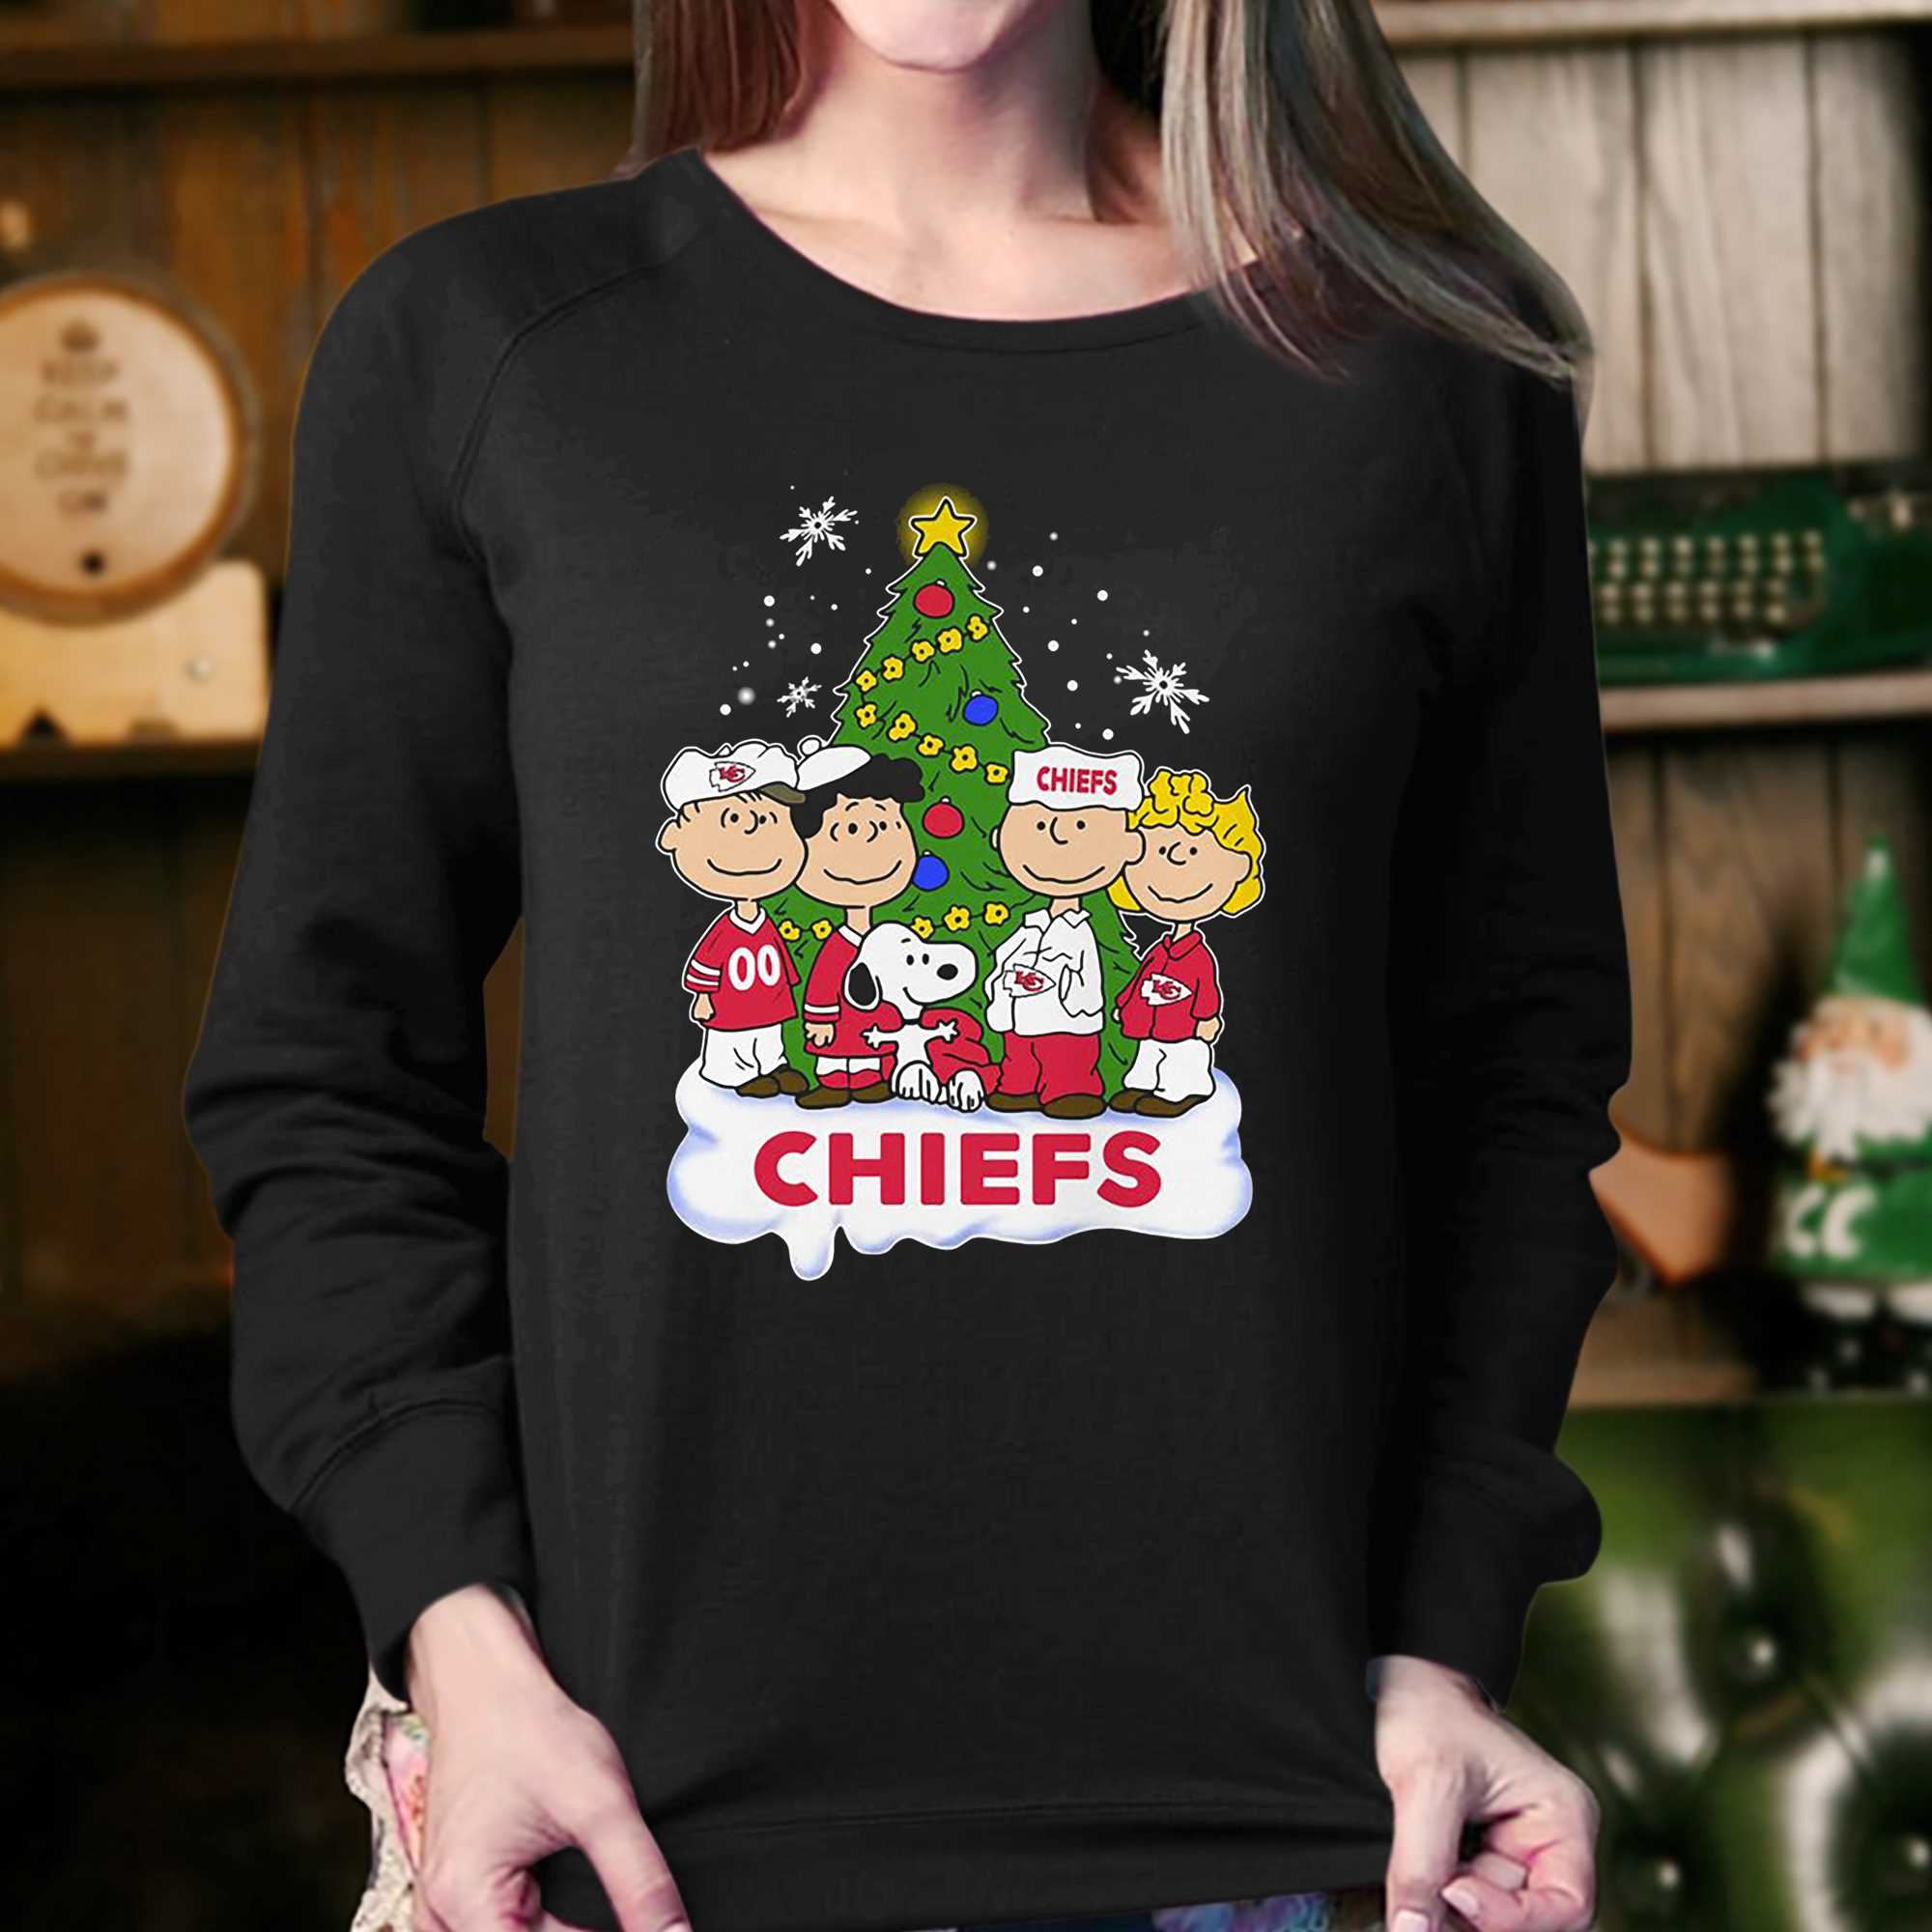 kc chiefs christmas shirt